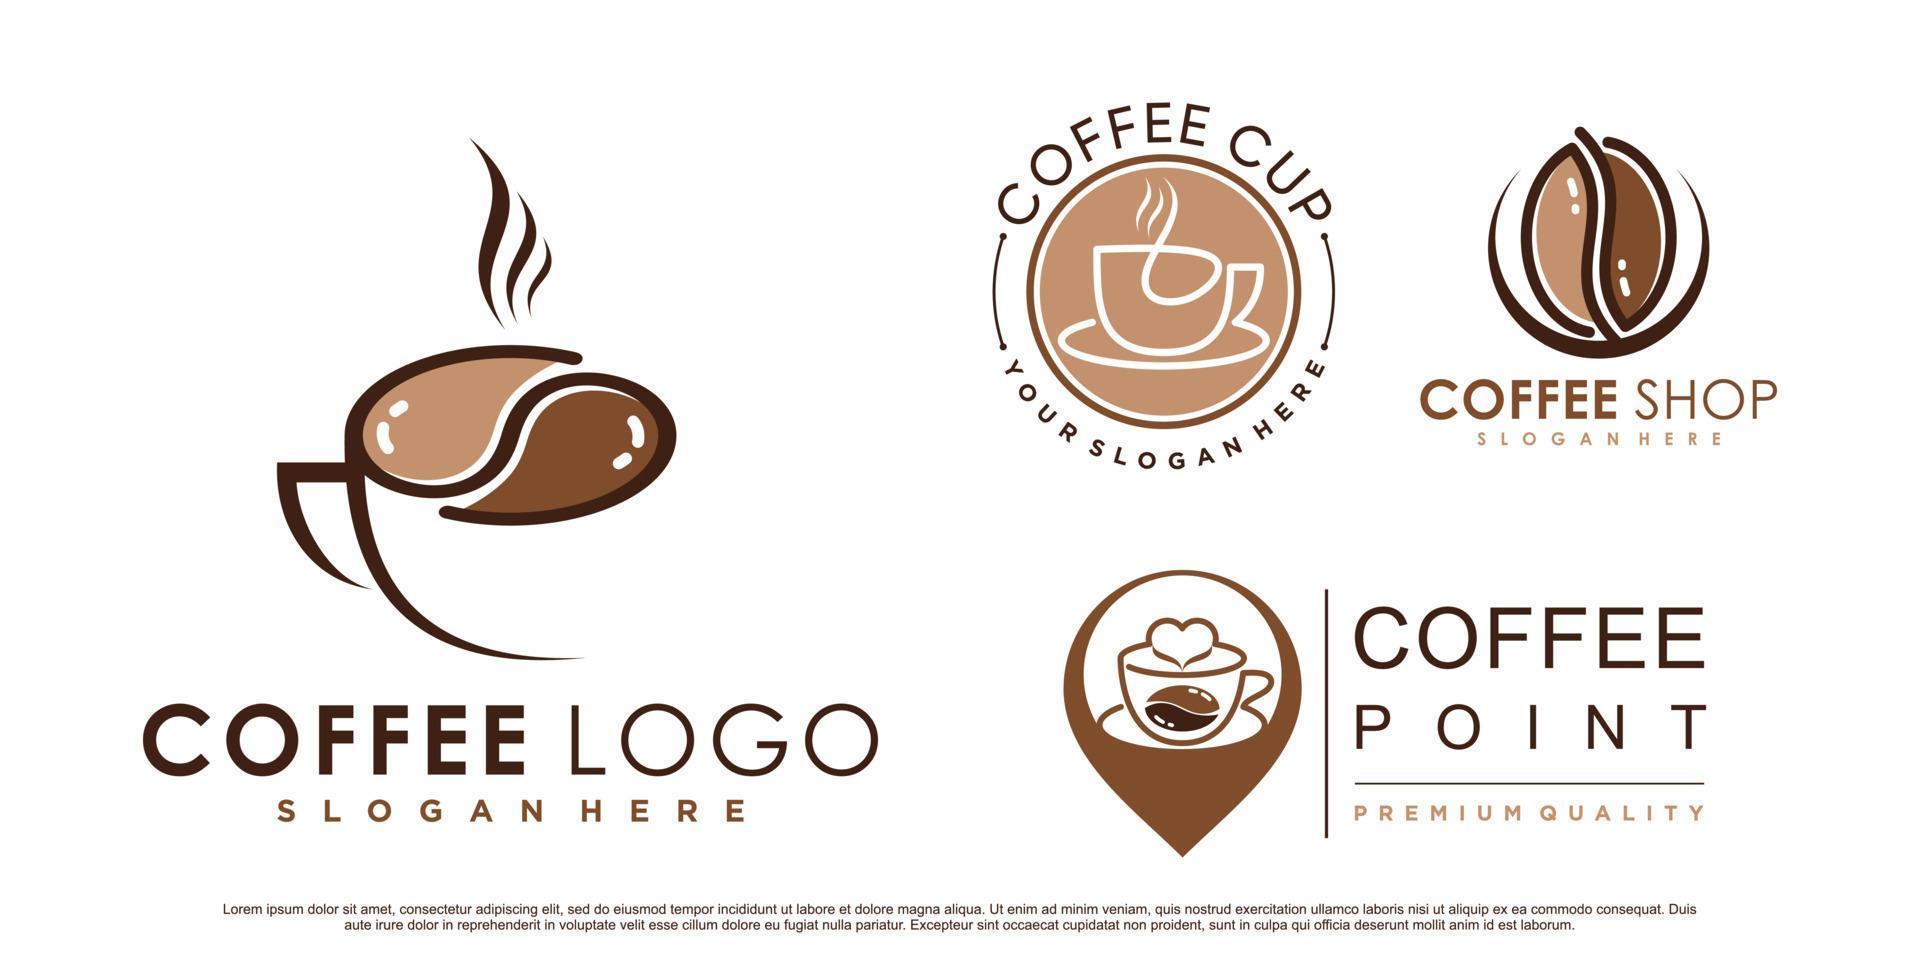 Coffee icon set logo and coffee shop logo design inspiration with creative element Premium Vector